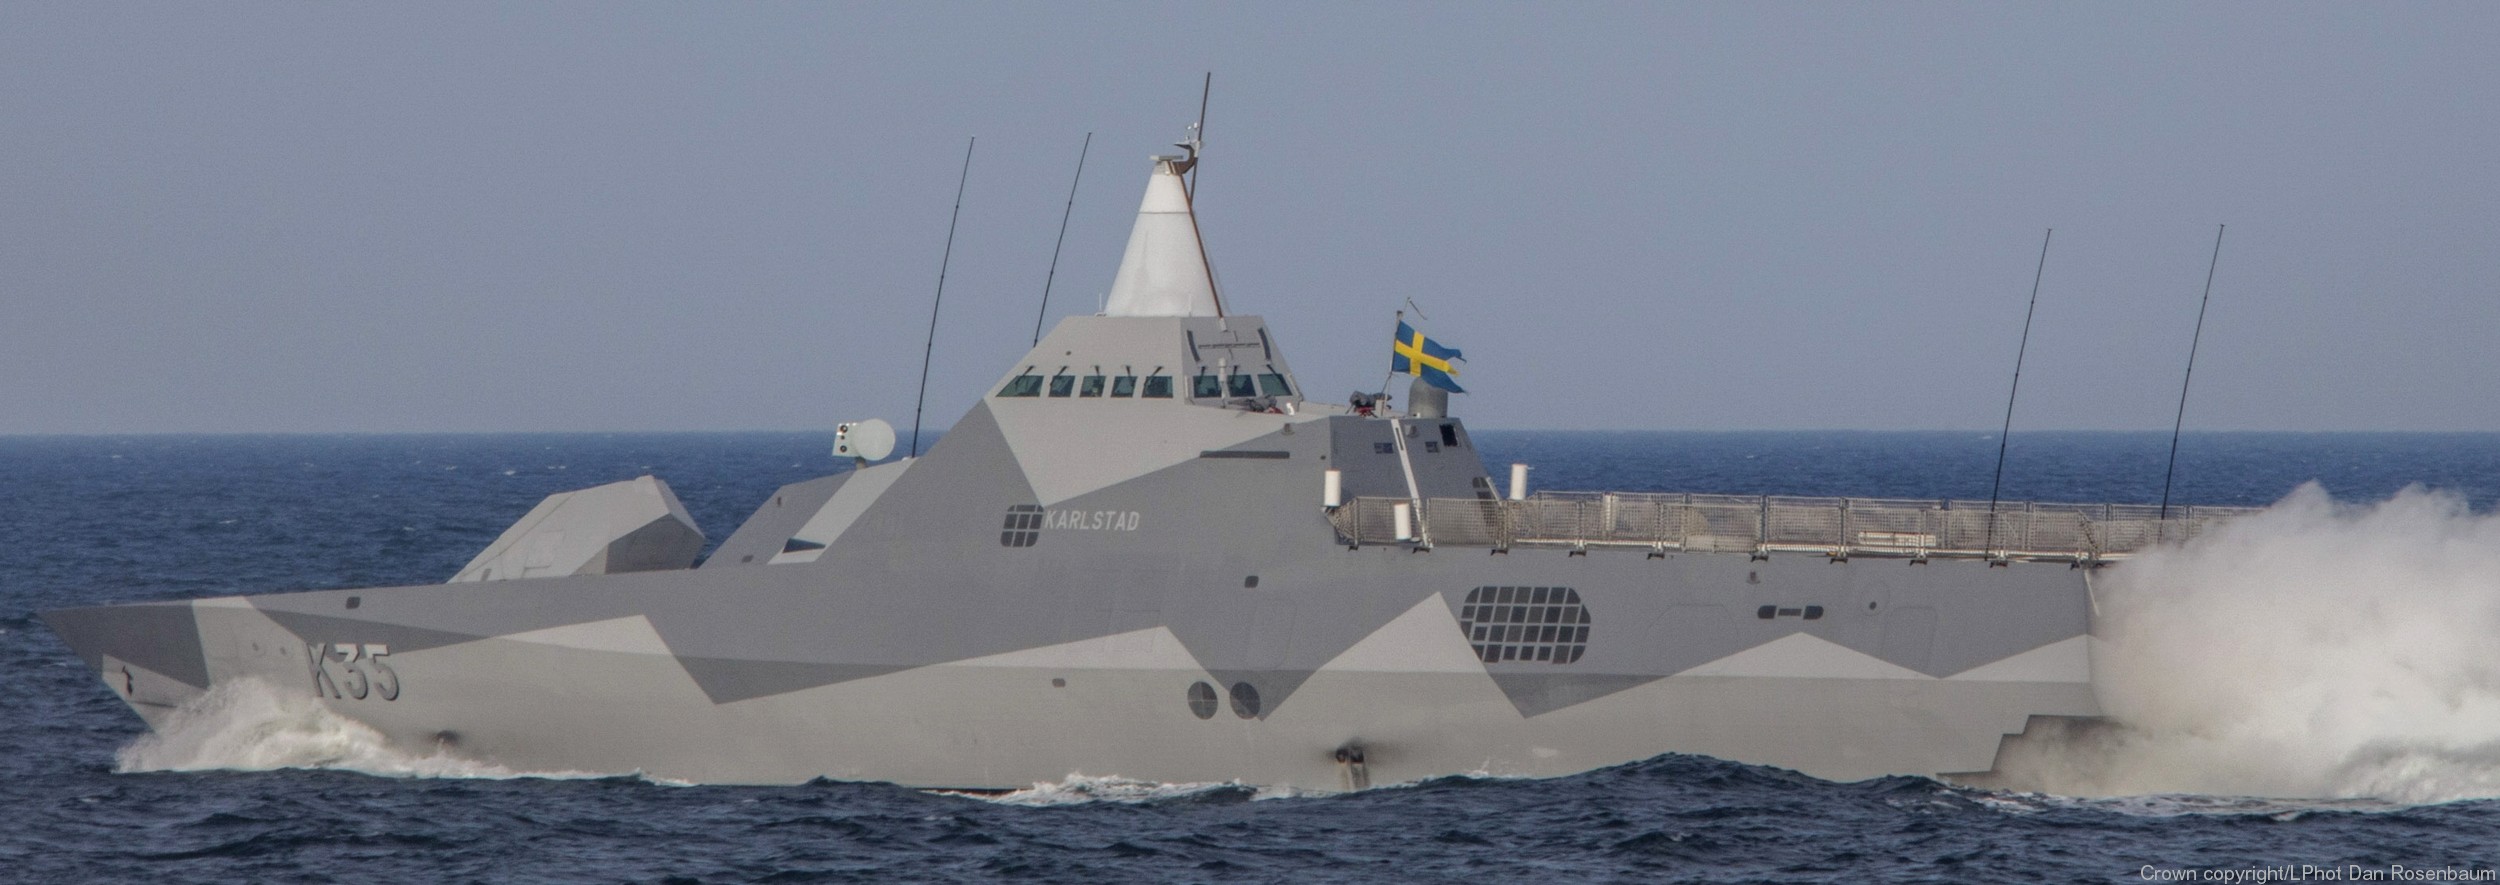 k35 hswms hms karlstad visby class corvette royal swedish navy svenska marinen 10